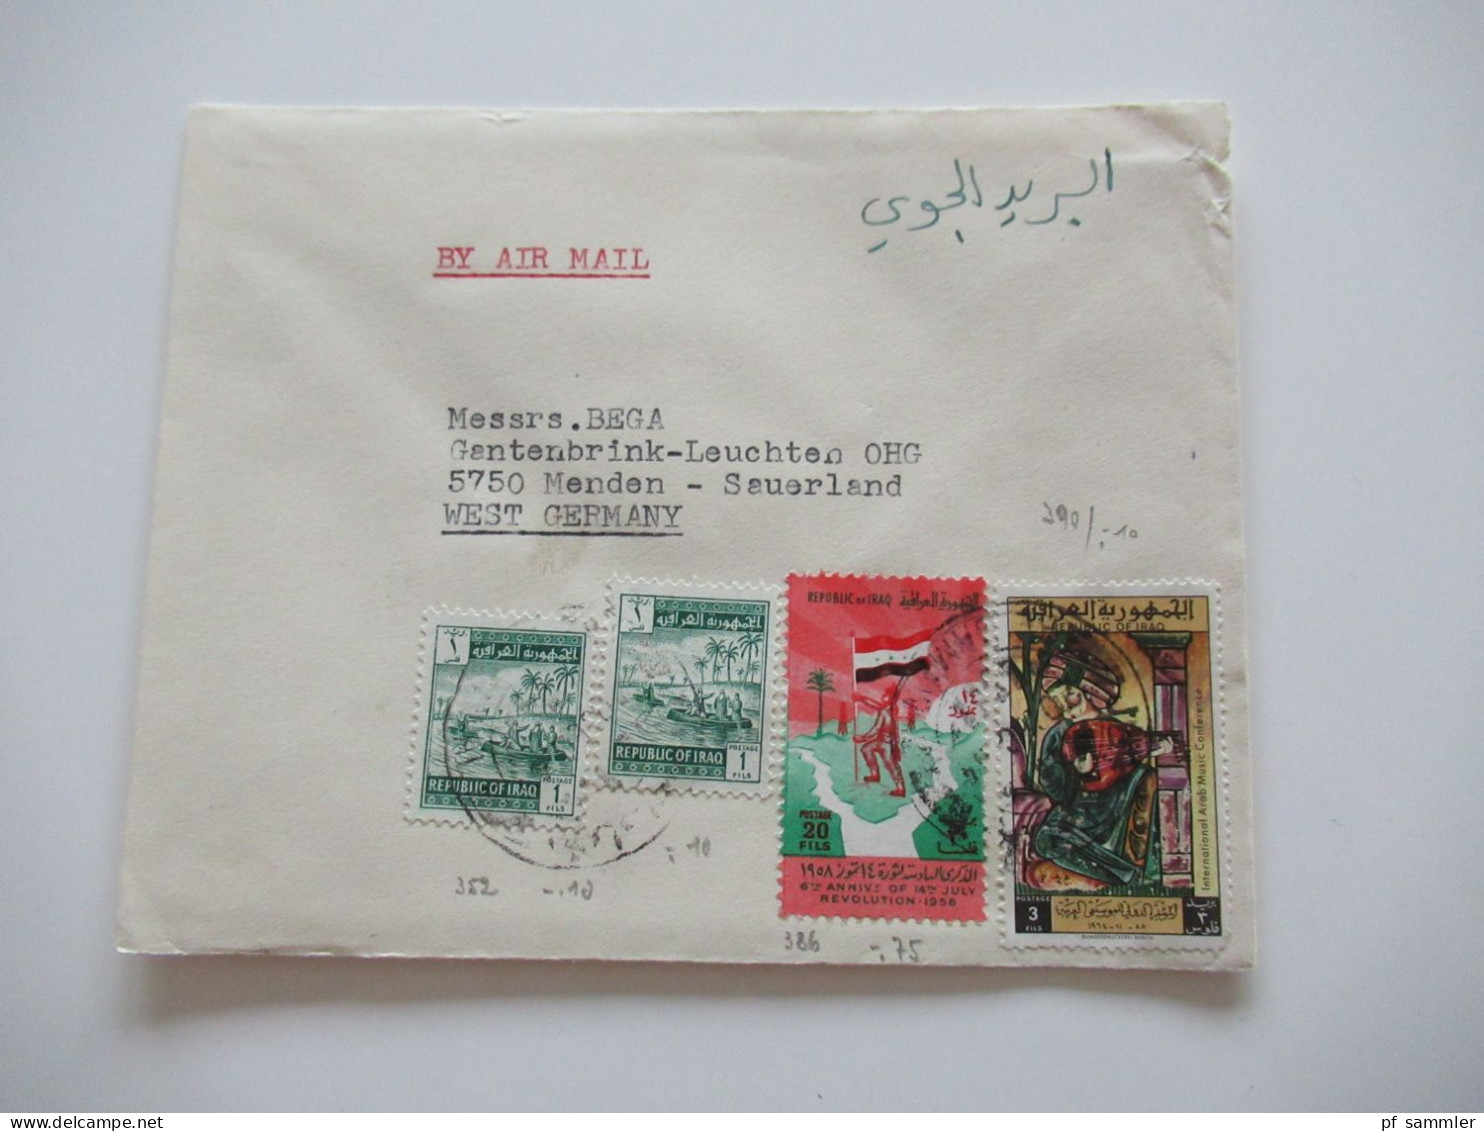 Asien Irak um 1963 Air Mail Luftpost 12 Belege Firmenumschläge Makram Trading Co. Akrawi Building Baghdad Republic Iraq